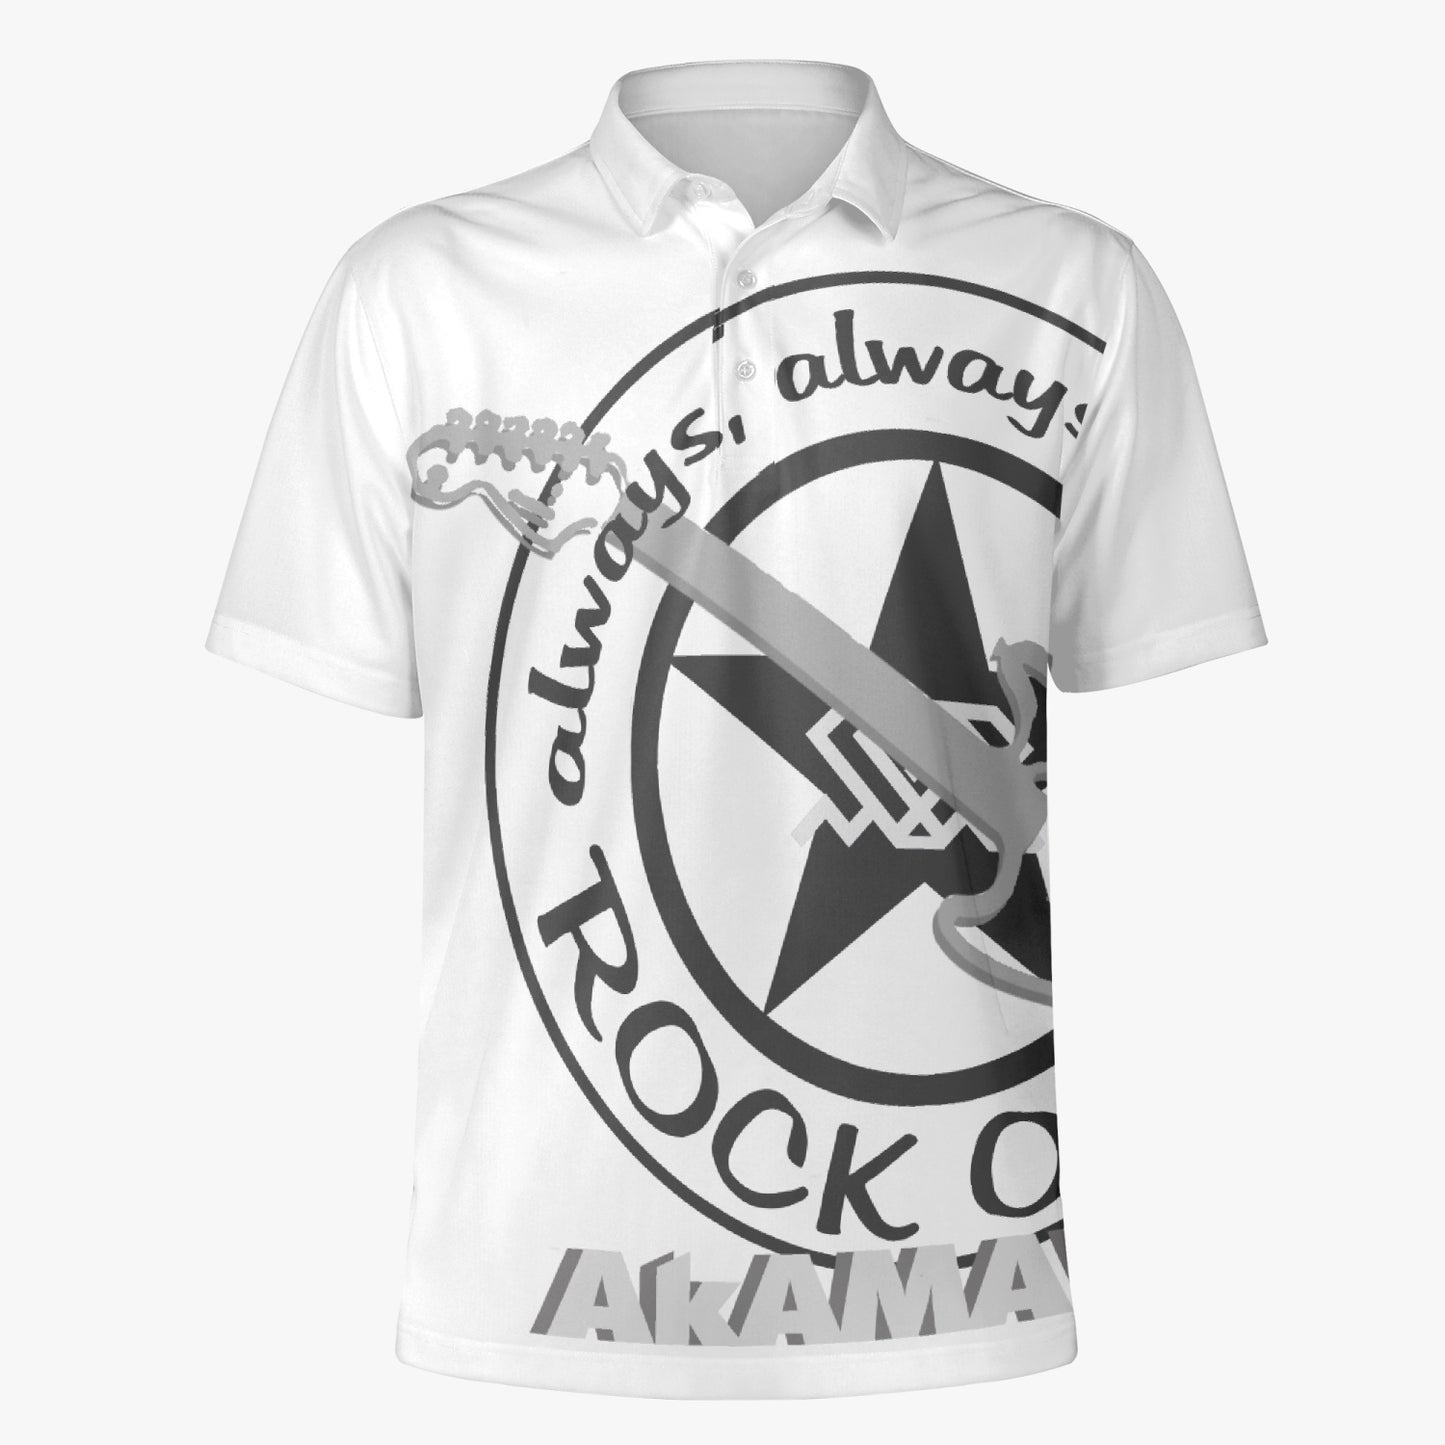 AC10M008 ROCK ON!!!  Camiseta Polo, exclusiva, caballero,  Diseño AkAMAWA